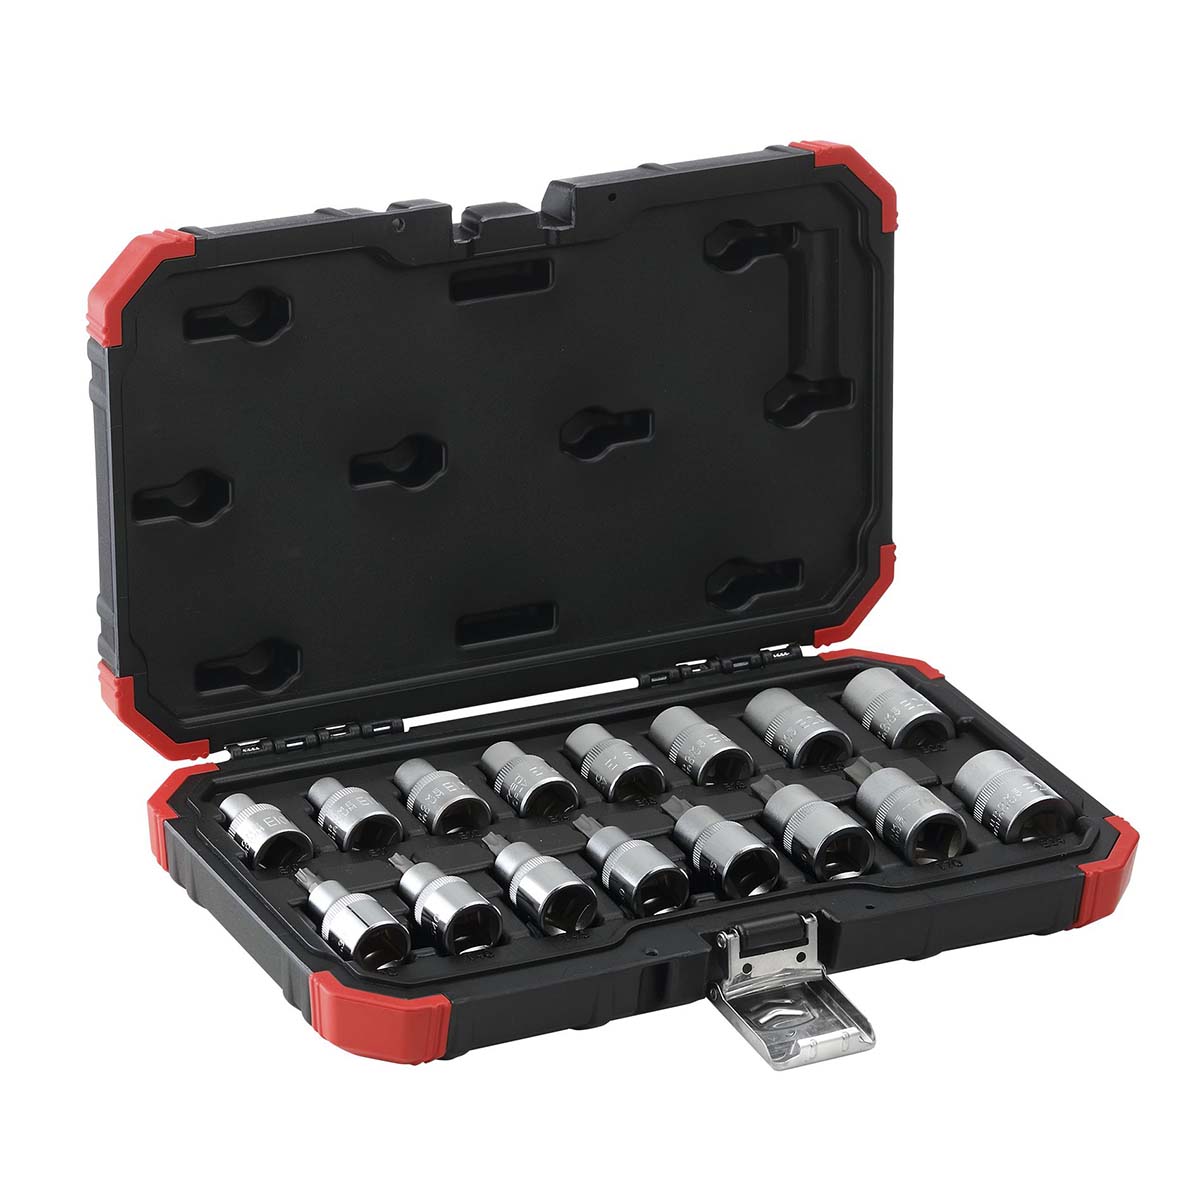 GEDORE red R68003016 - 1/2 socket wrench set TXE10-24T30-70 16pcs (3300009)